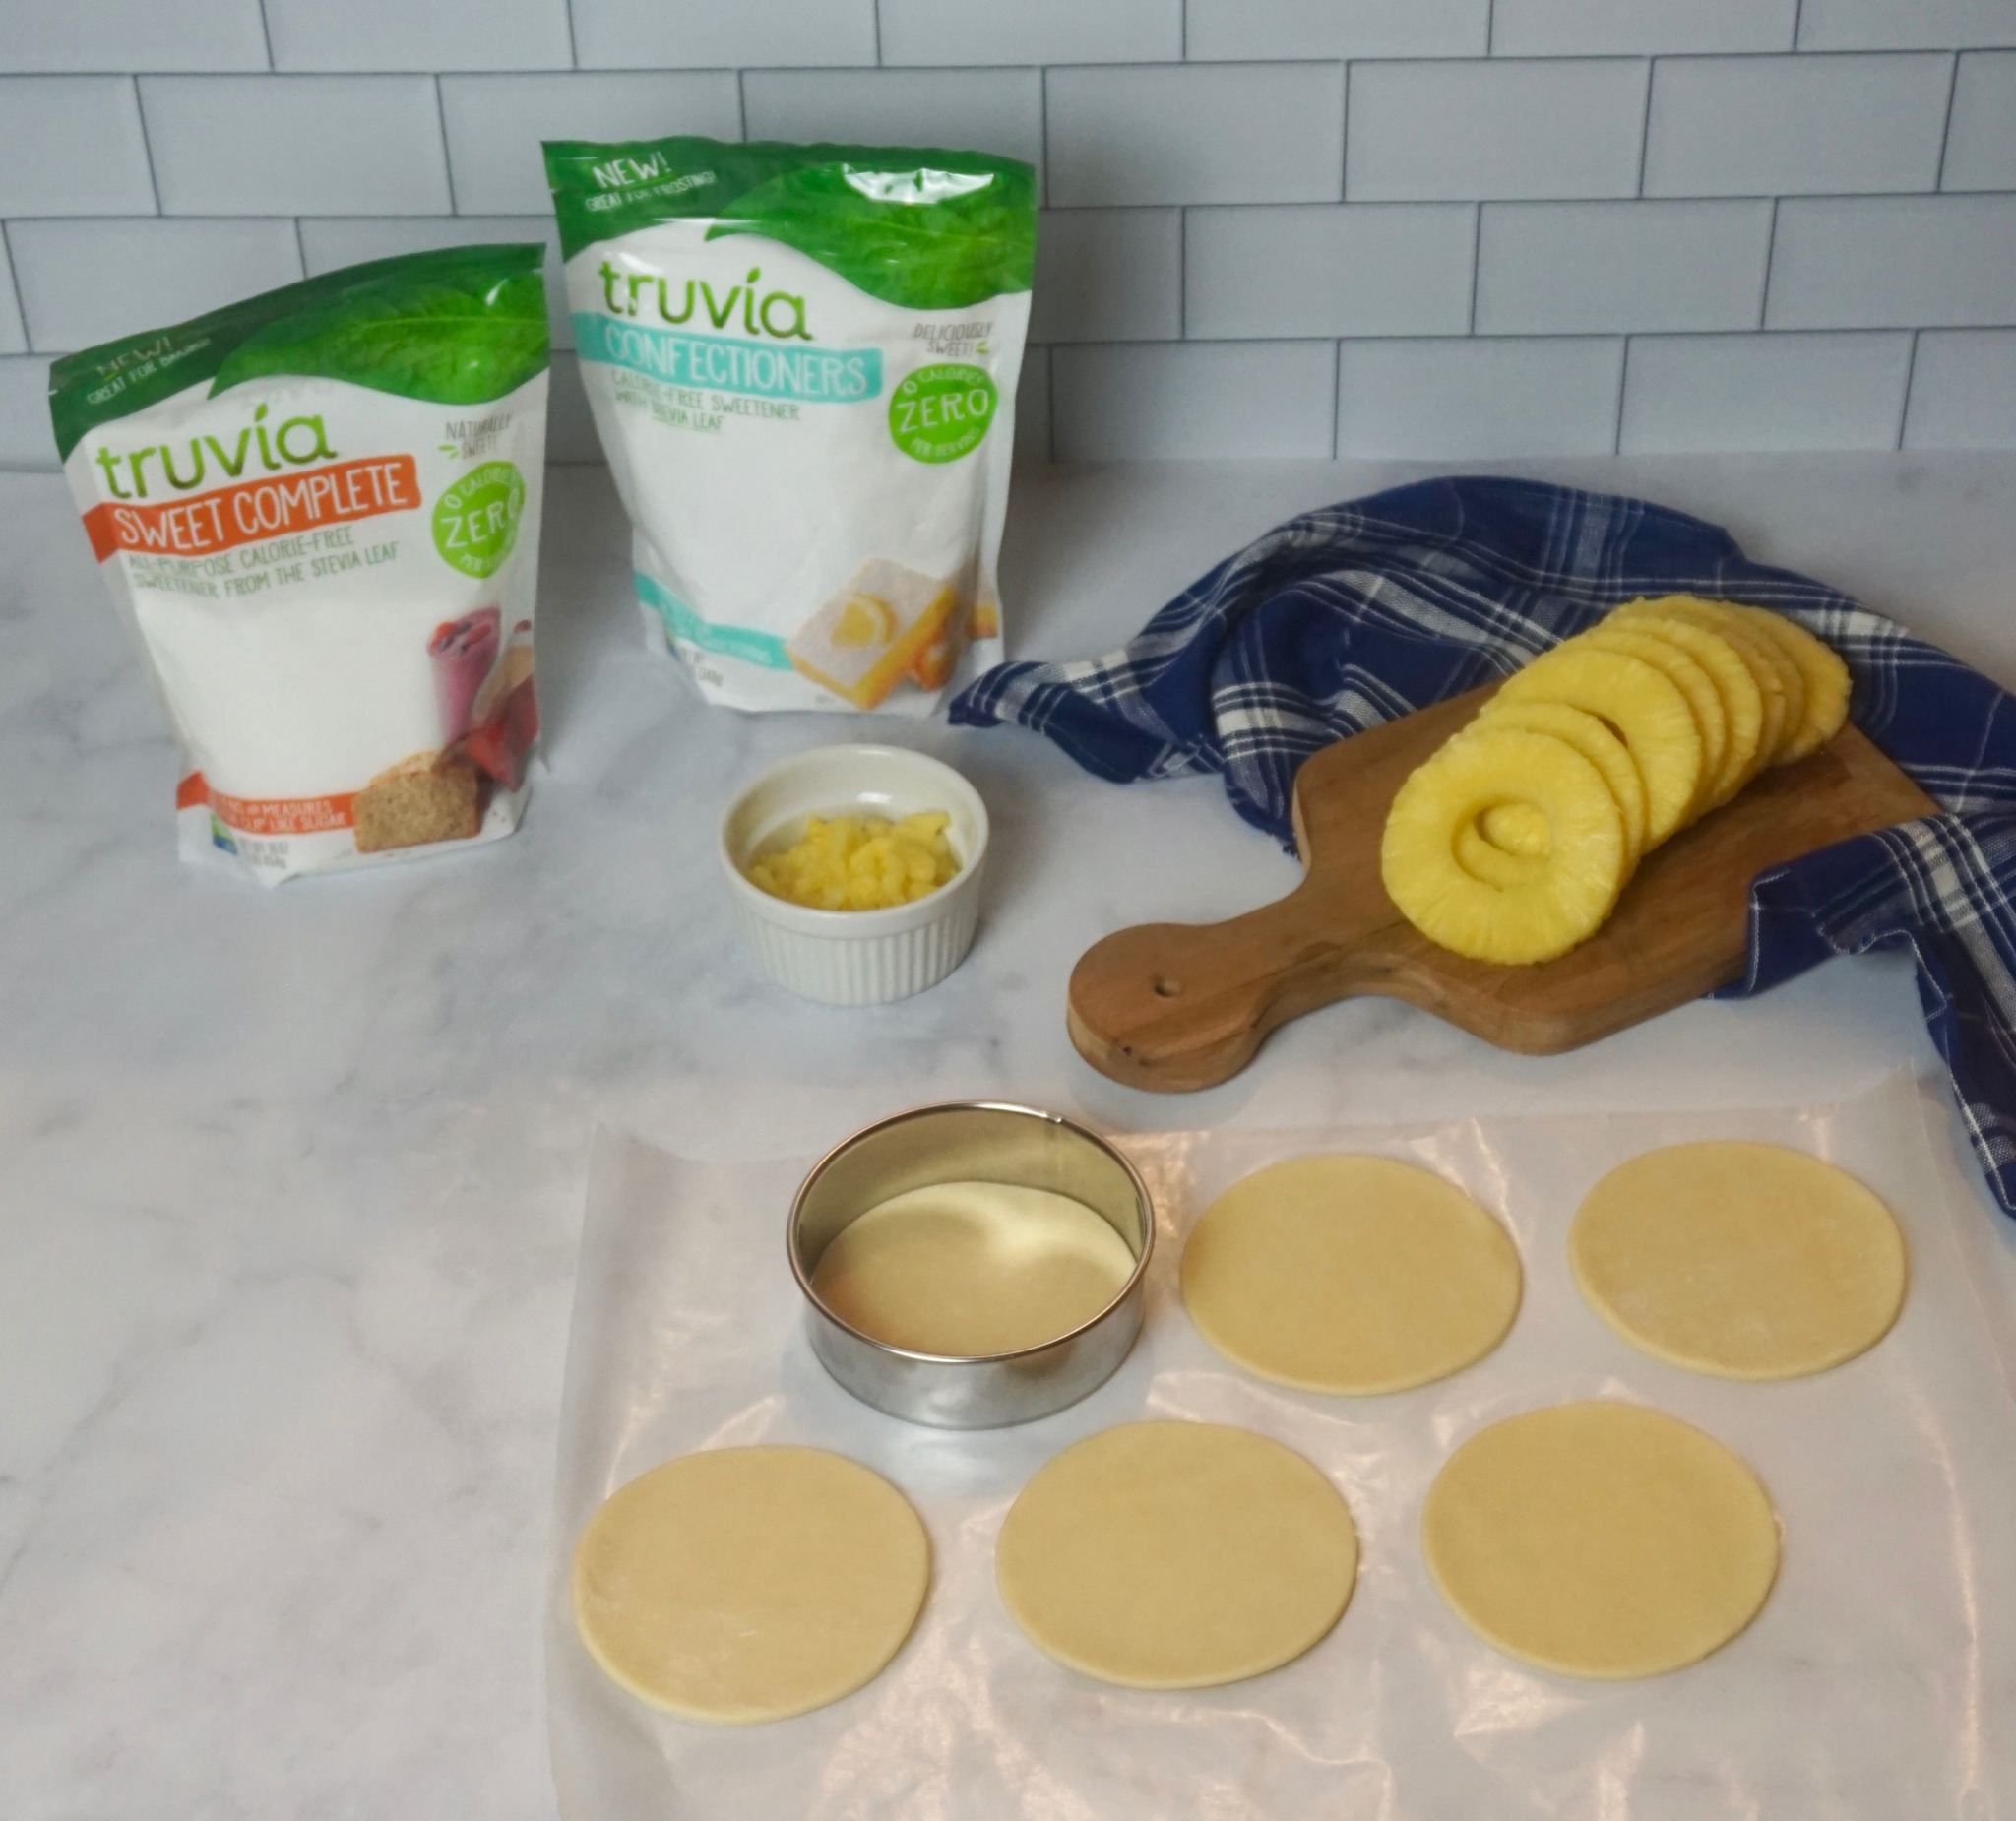 How to make pineapple empanadas